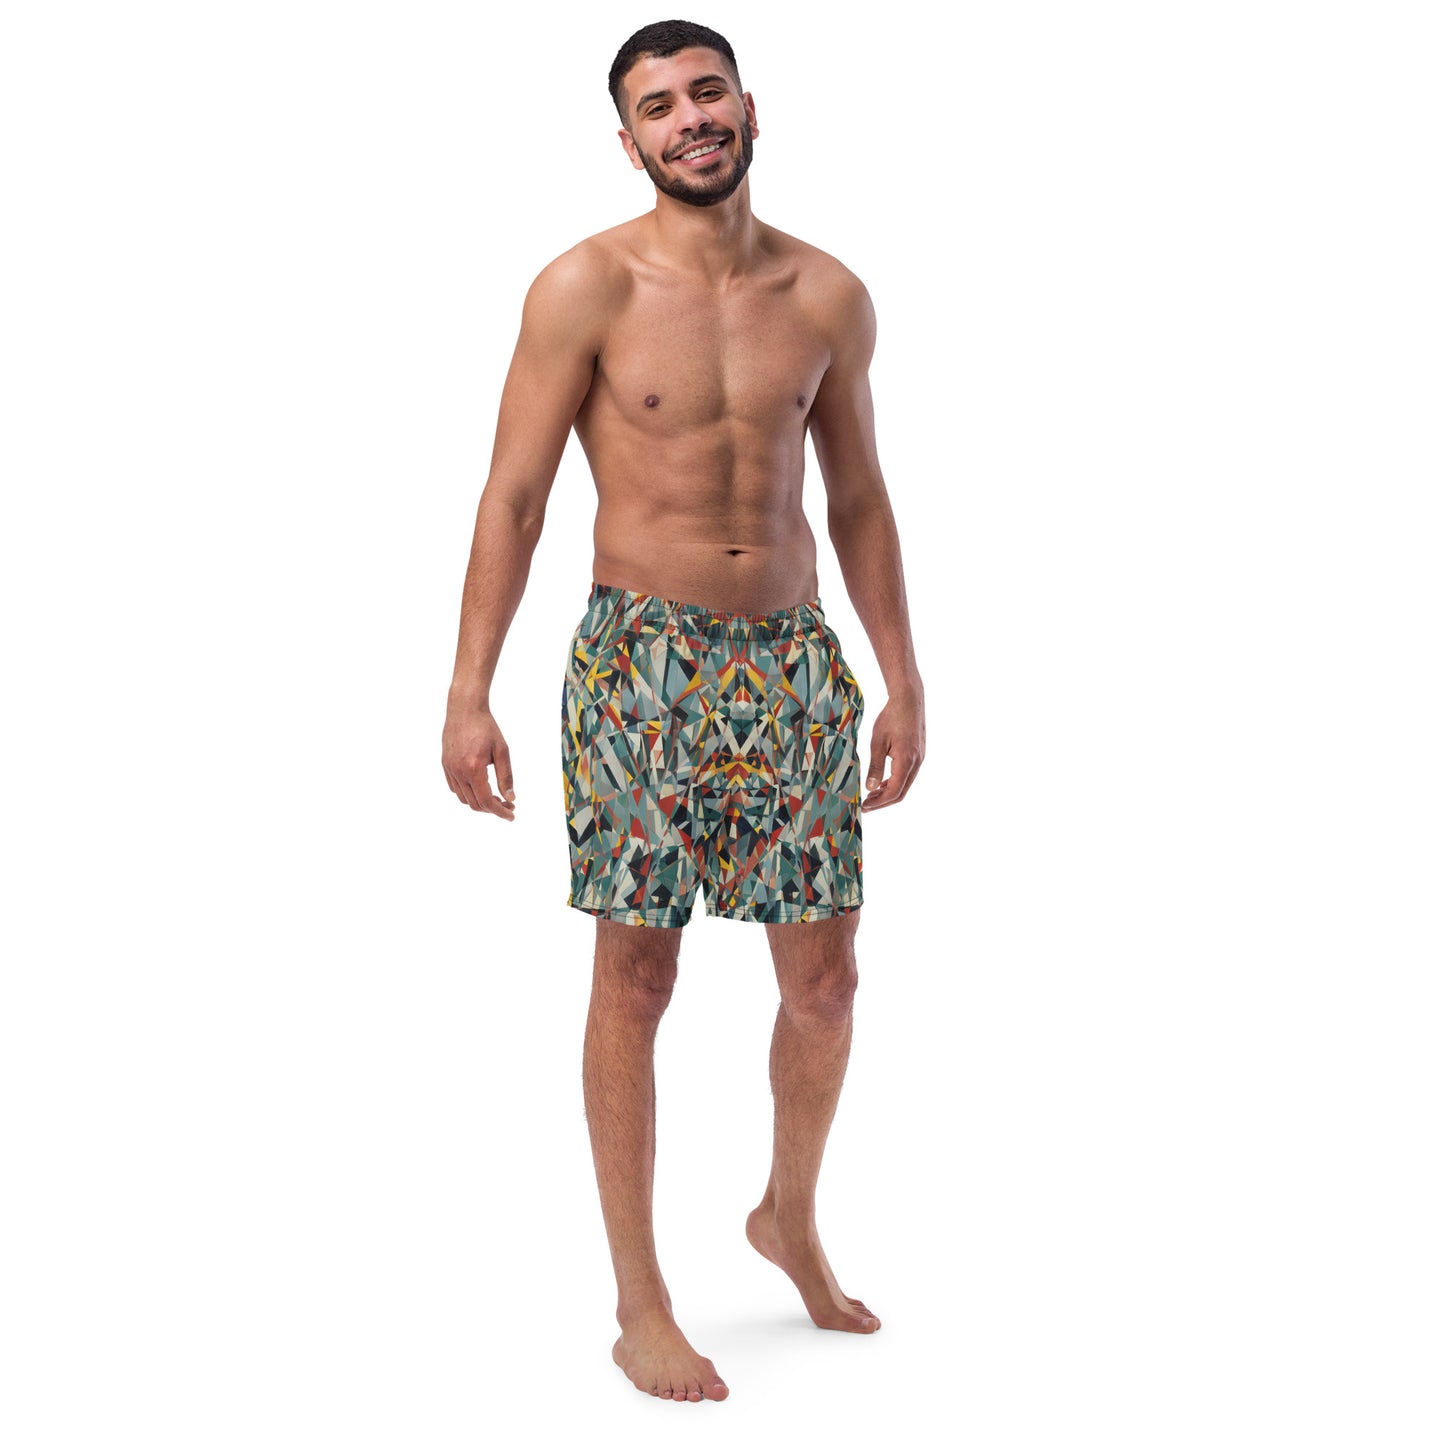 Watercolour Wasteland : Men's swim trunks